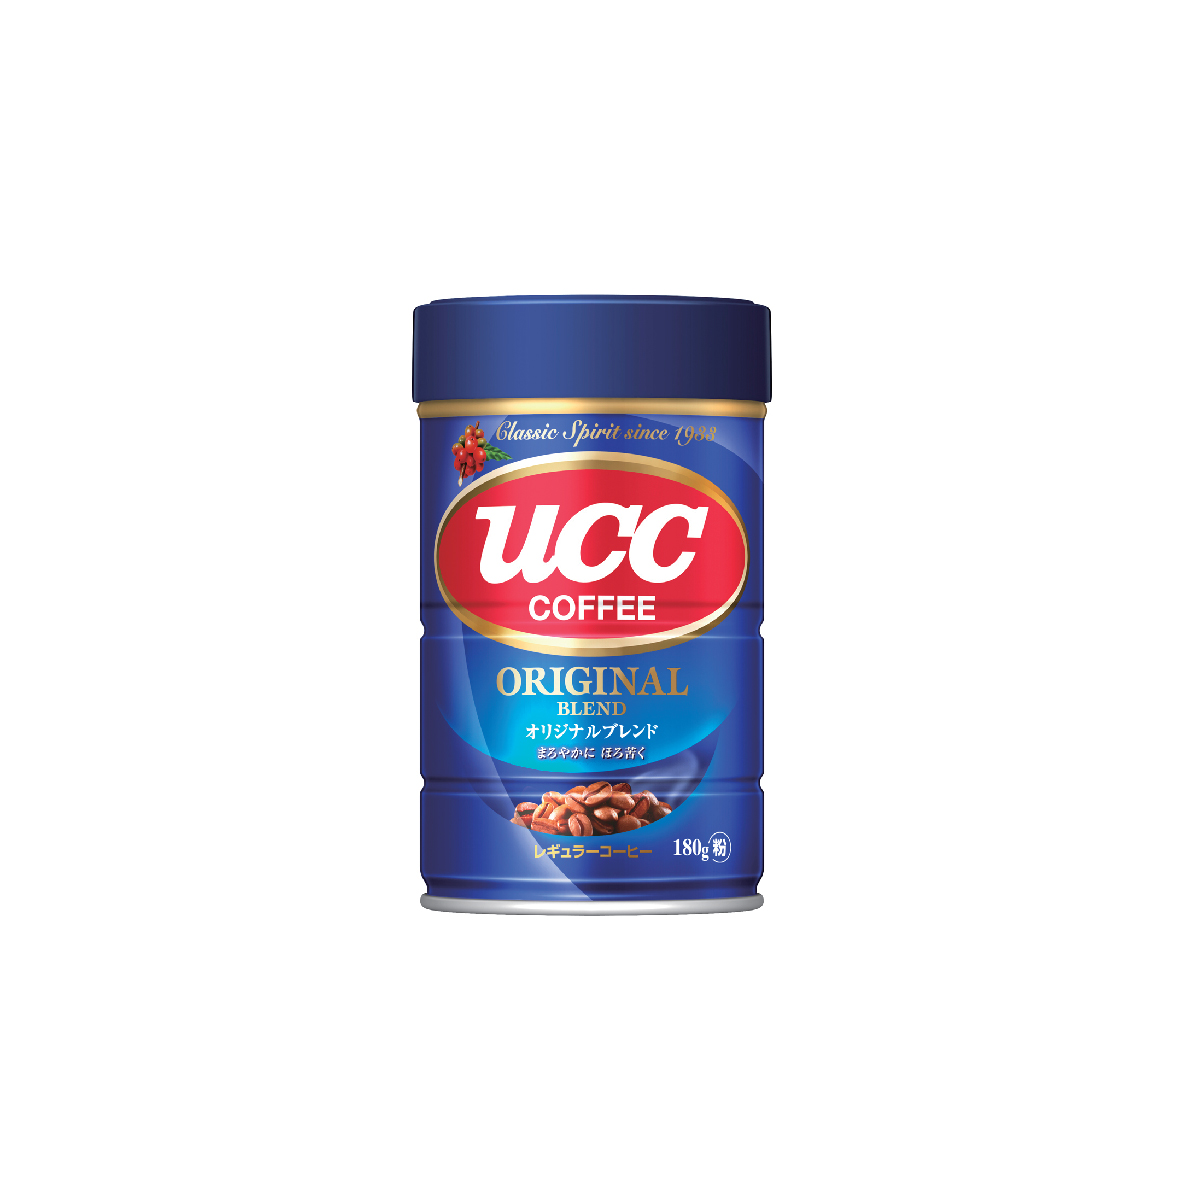 UCC Coffee Original Blend Roasted Coffee